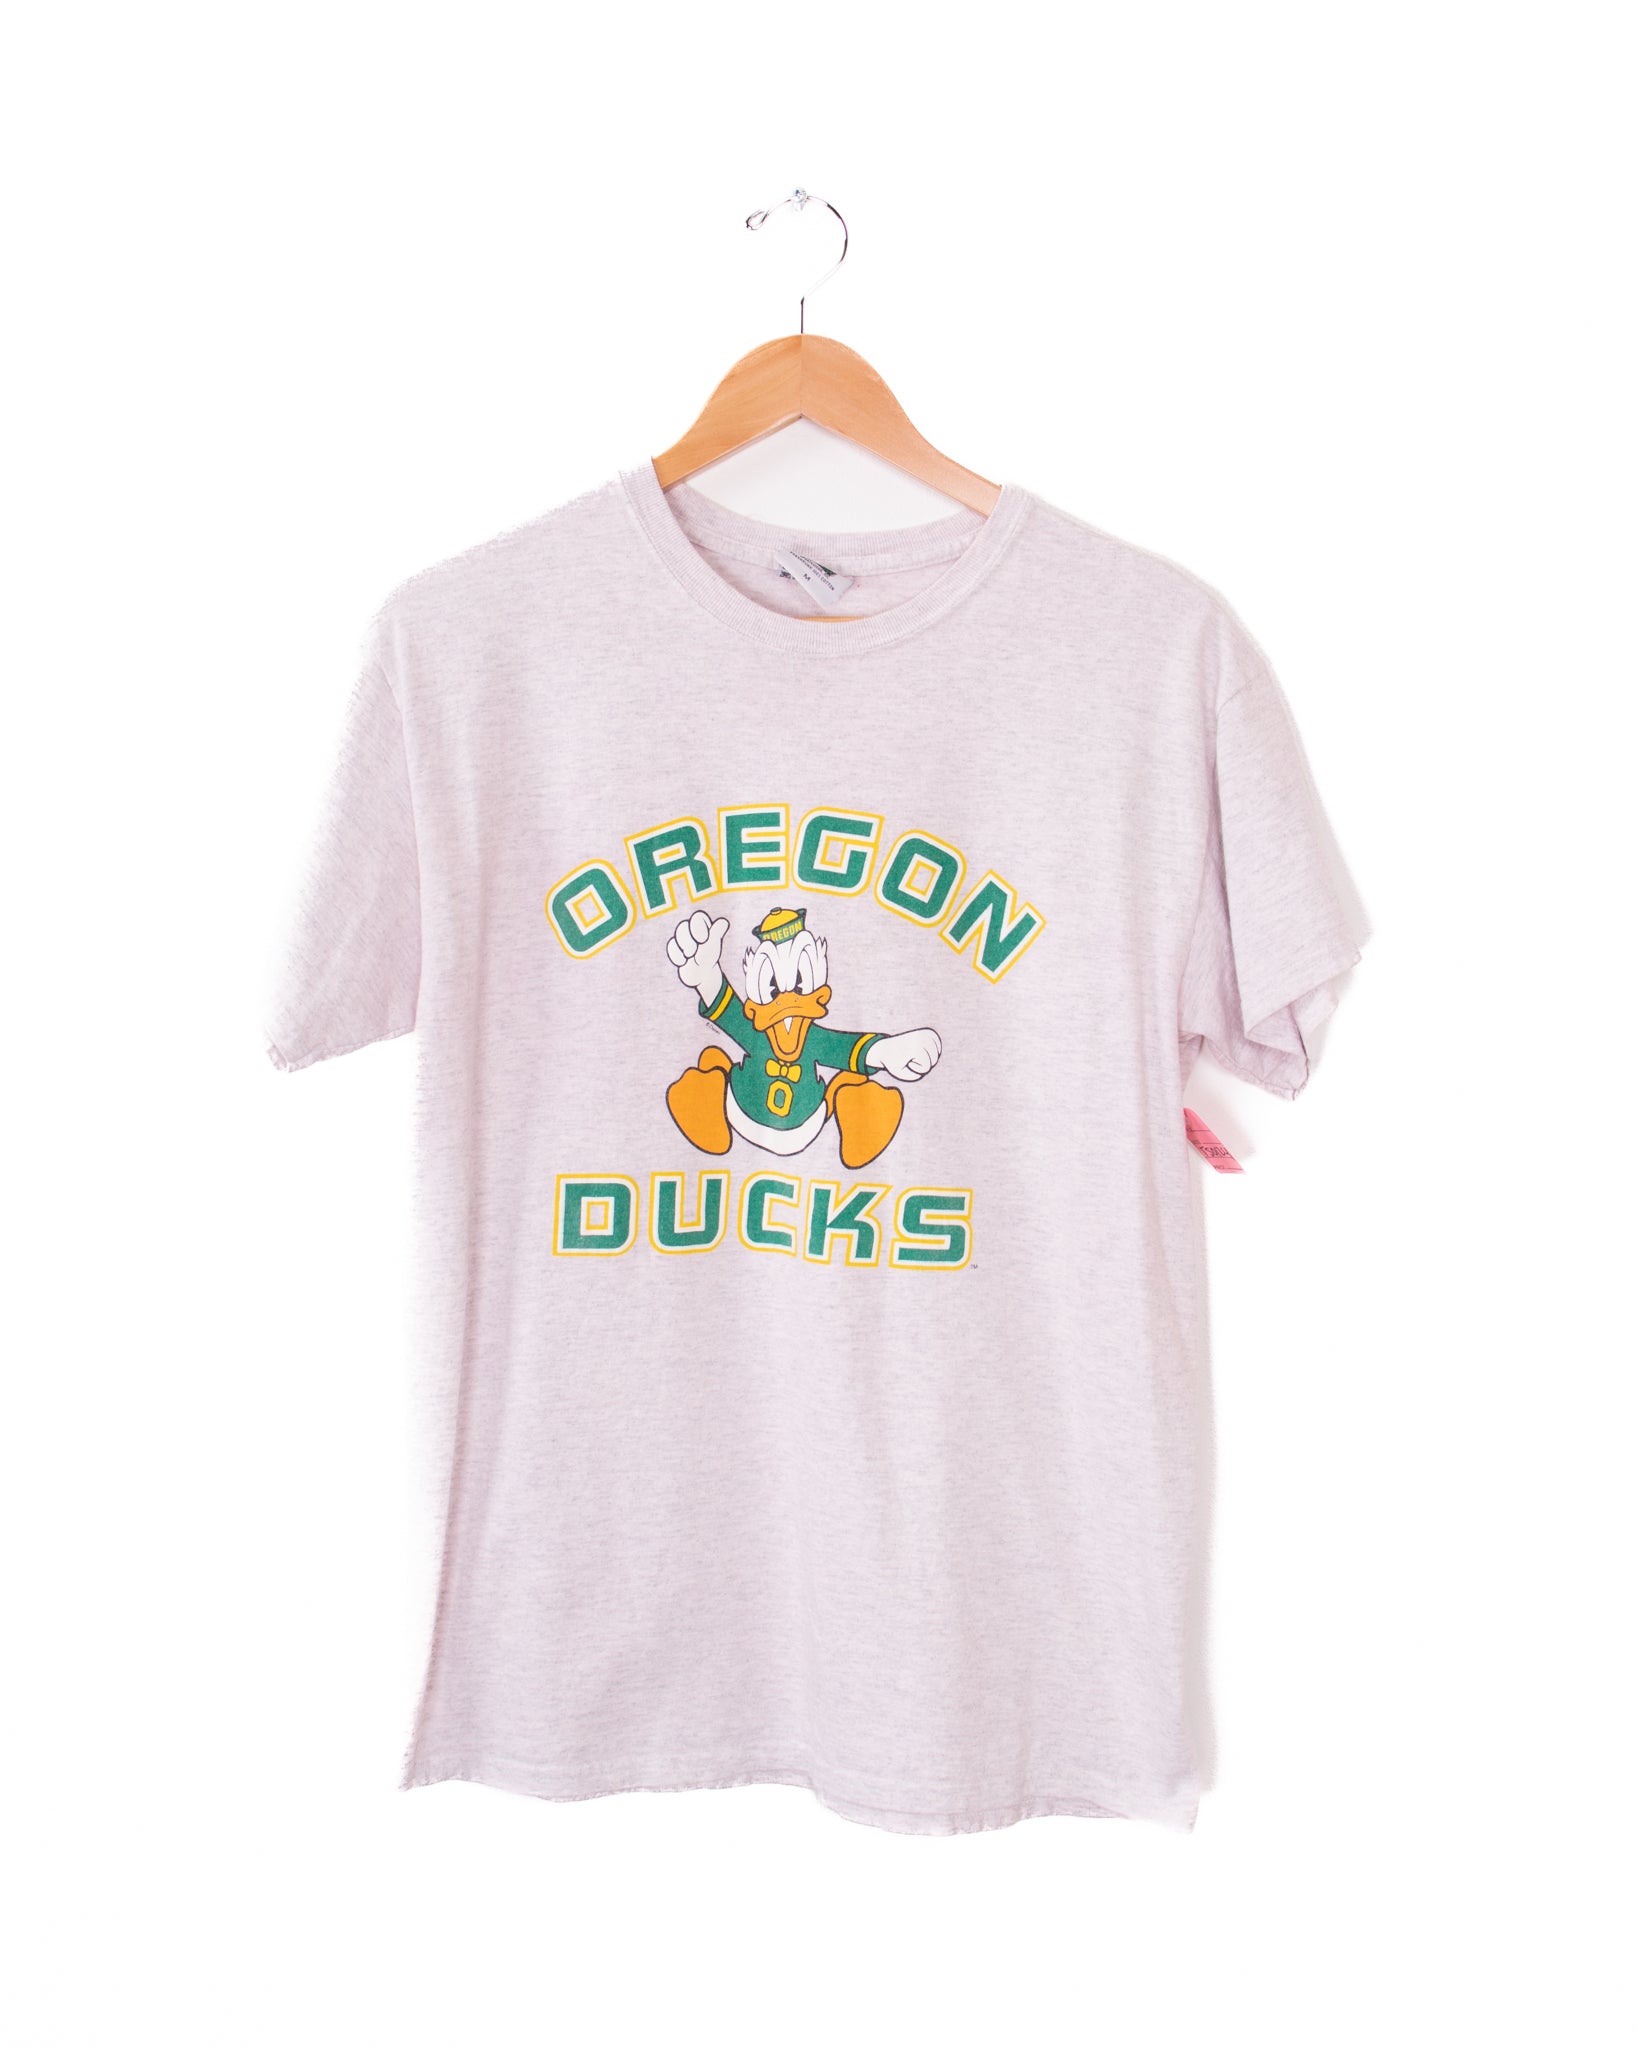 Oregon Ducks w/ Donald Duck T-Shirt